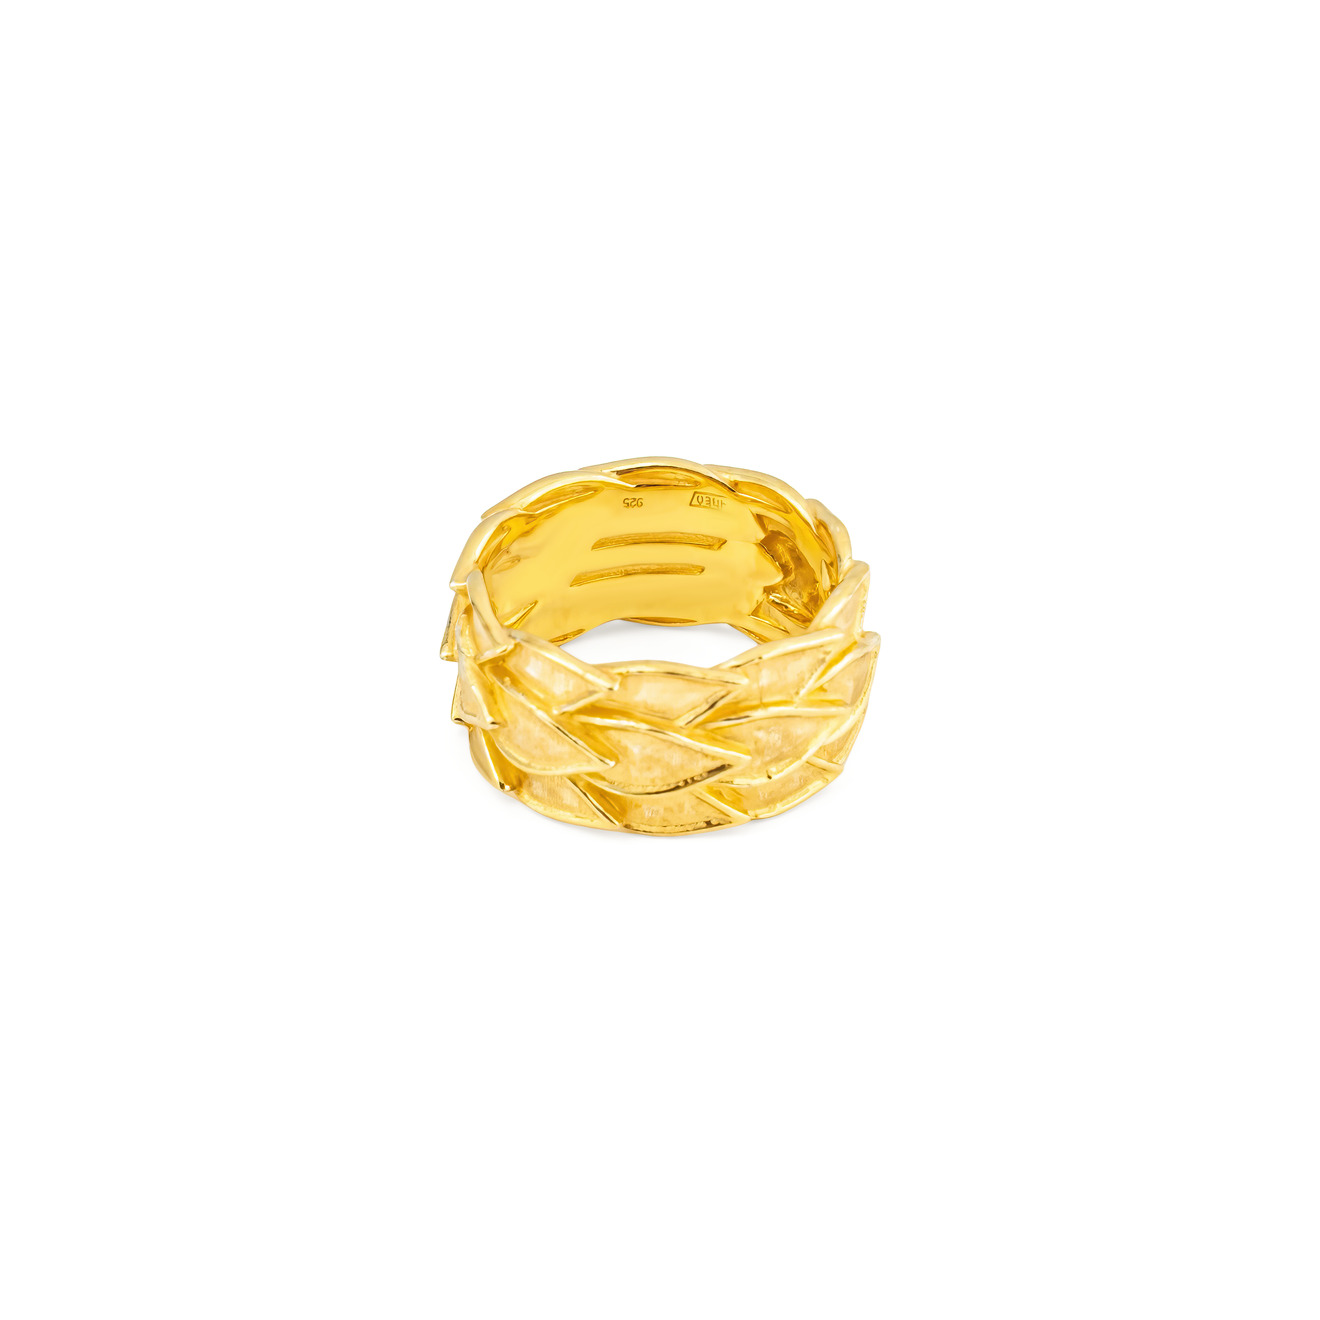 11 Jewellery Позолоченное кольцо Antique gold из серебра 11 jewellery позолоченные серьги woodlice gold из серебра